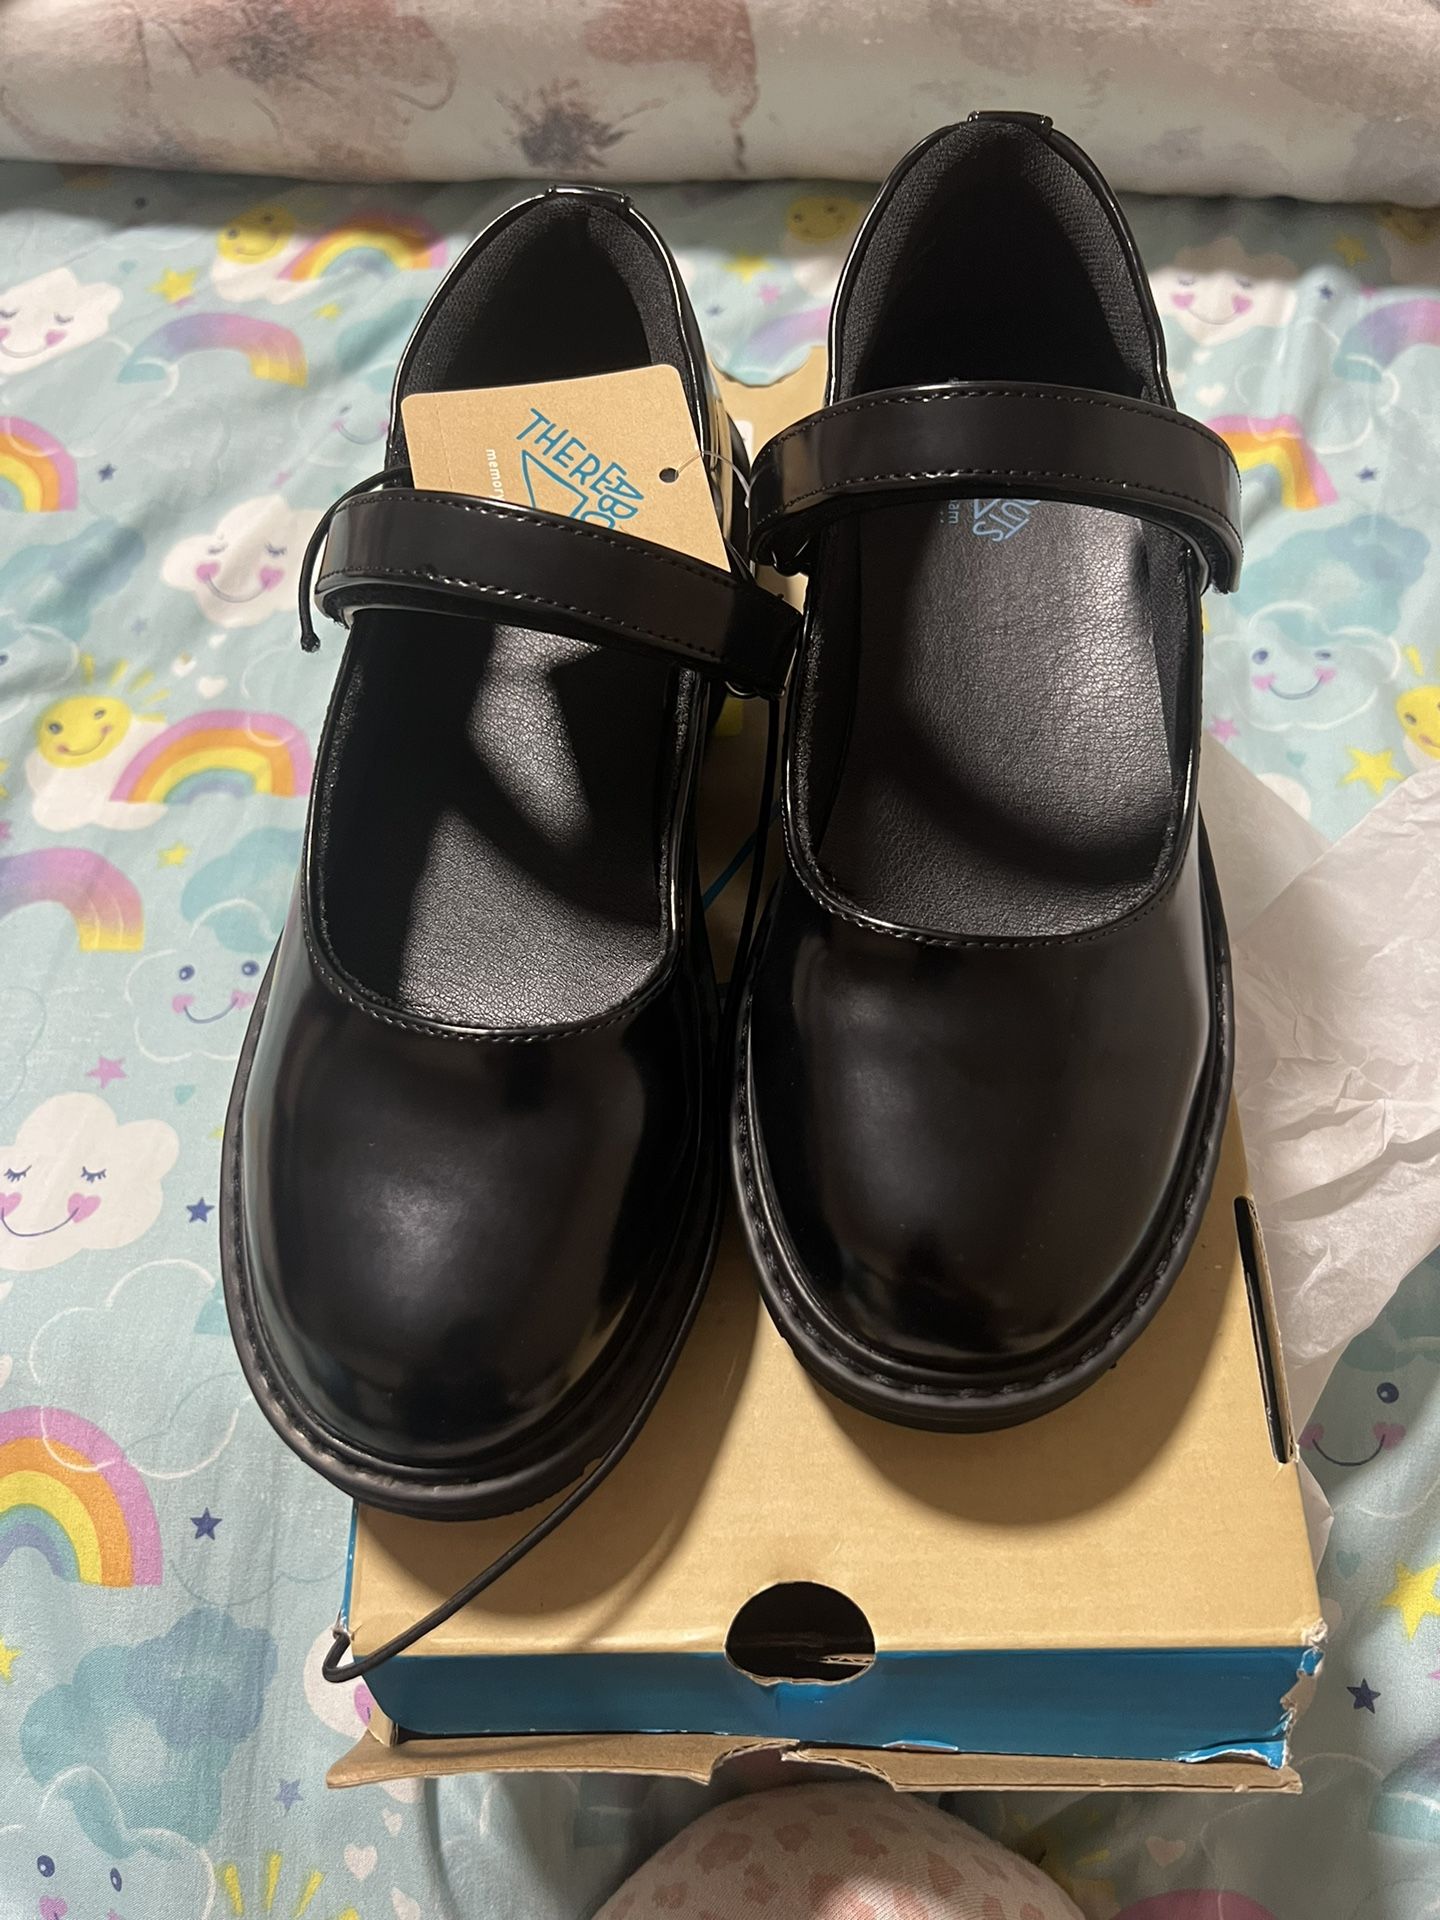 Girl’s Black Flutter Shoes/size 3 M/nib